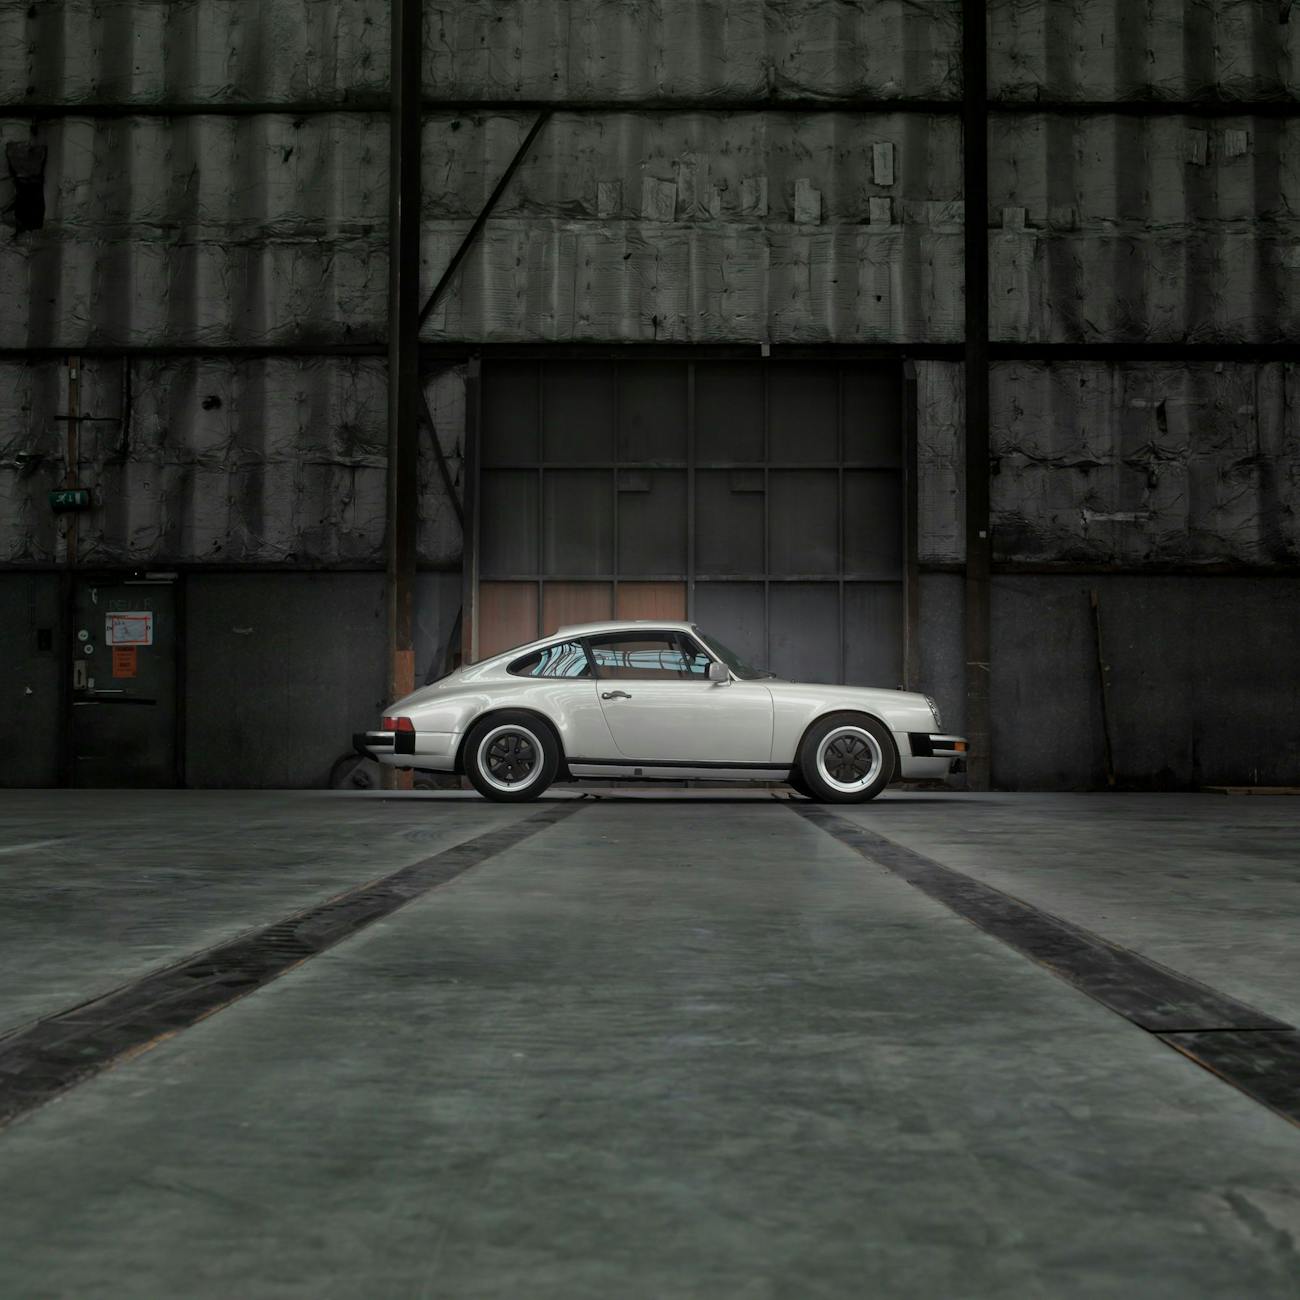 Zinmetallic Porsche 911 SC in a hangar